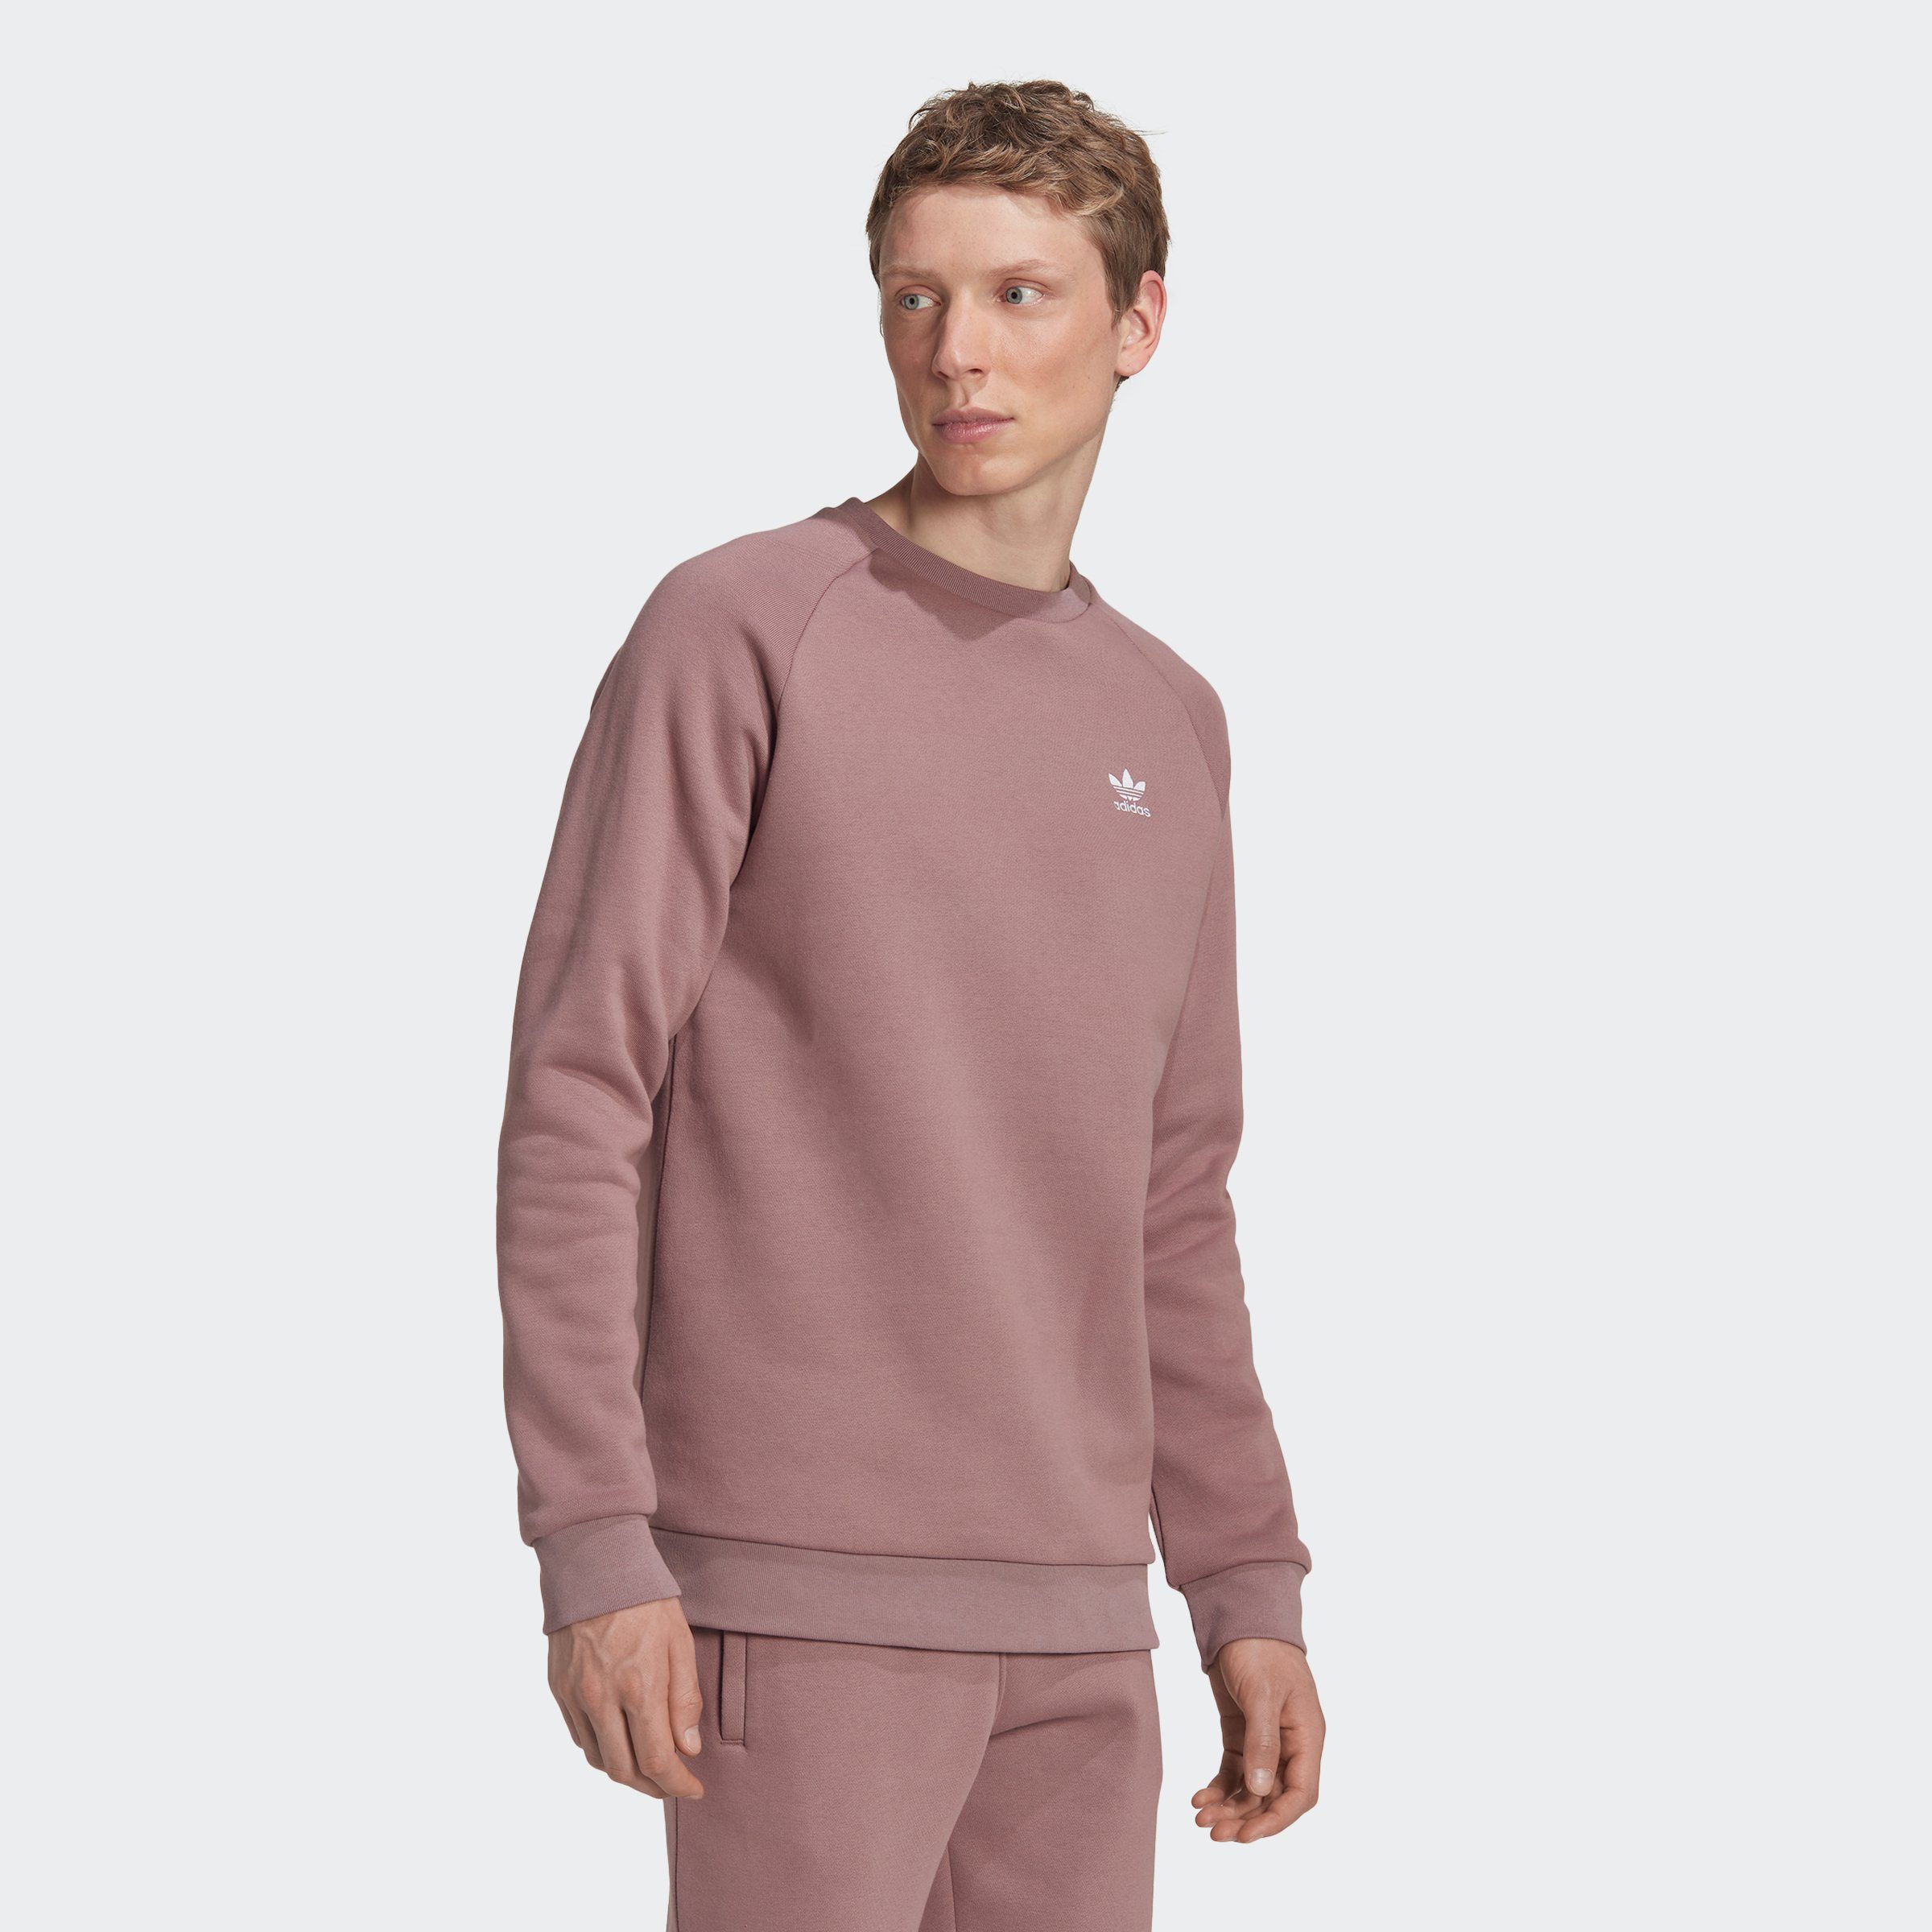 TREFOIL WONOXI adidas ADICOLOR ESSENTIALS Originals Sweatshirt